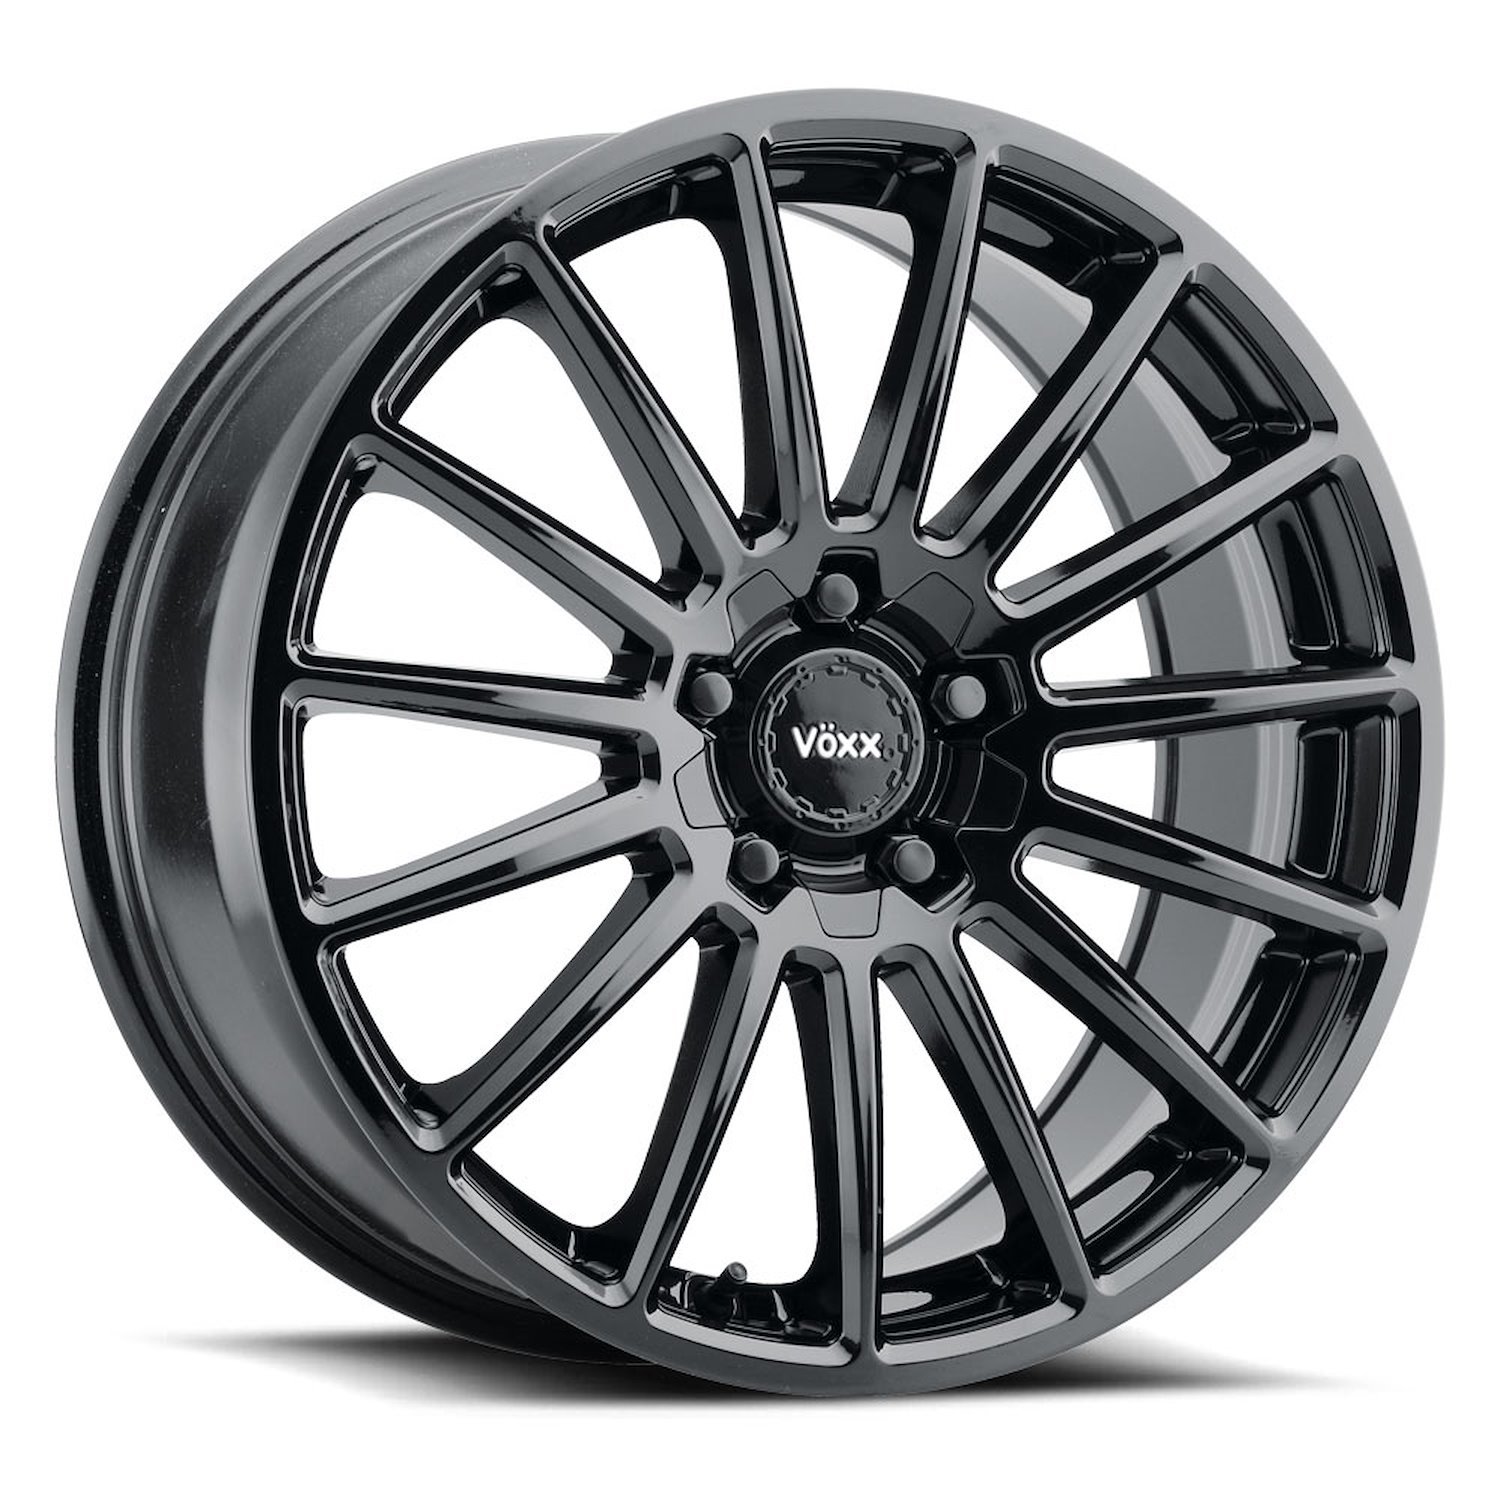 CAS 670-5005-40 GB Casina Wheel [Size: 16" x 7"] Finish: Gloss Black